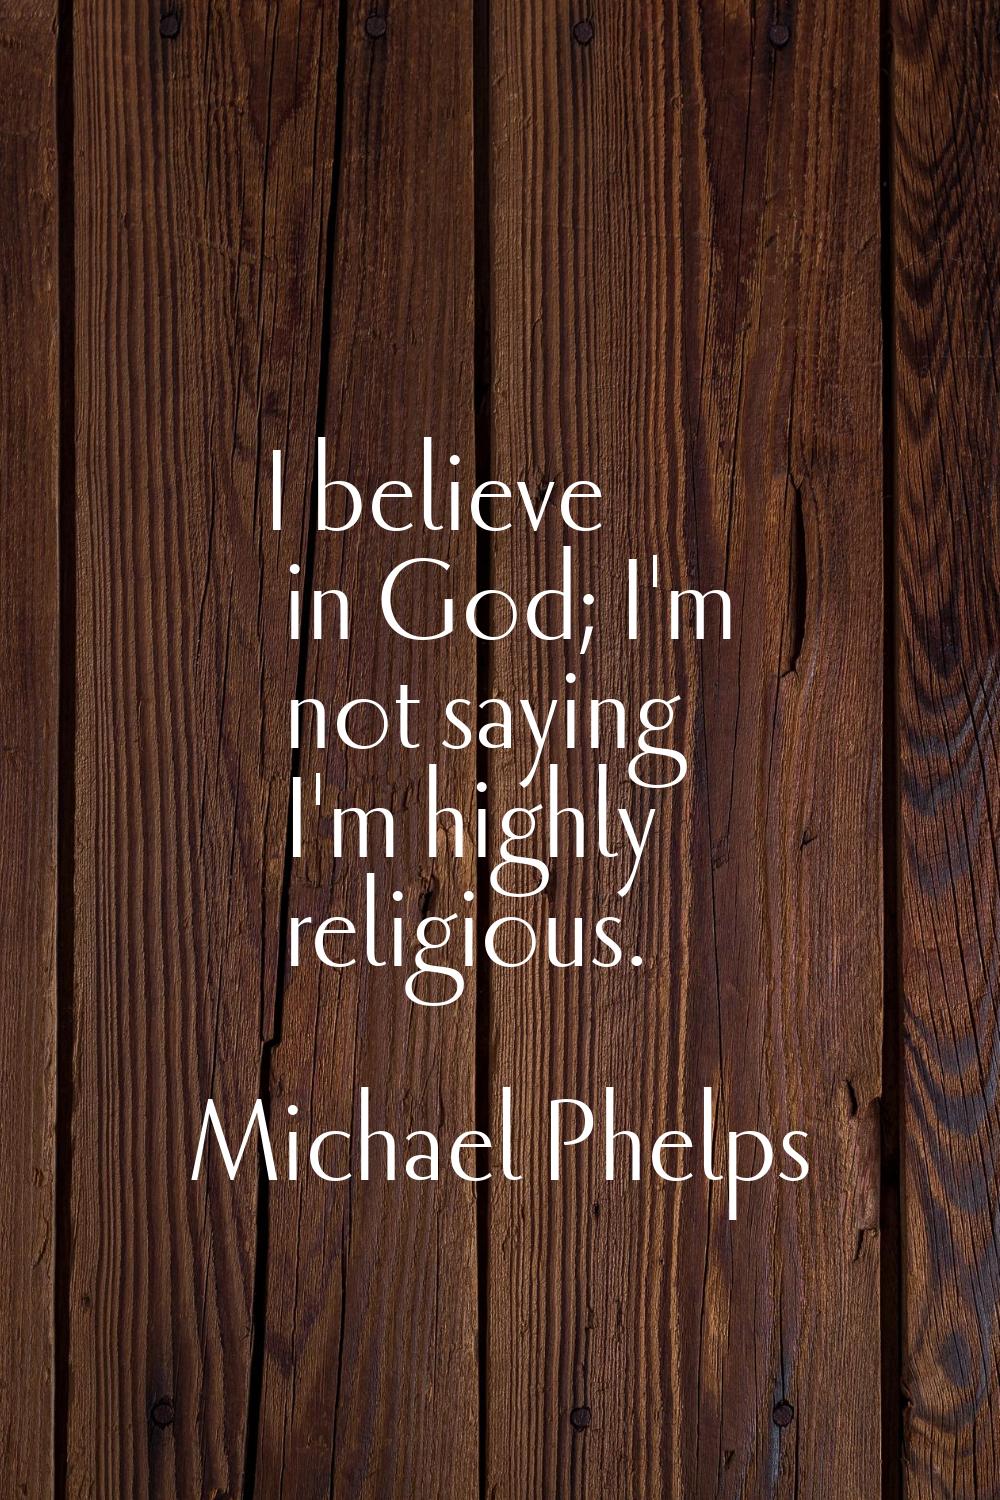 I believe in God; I'm not saying I'm highly religious.